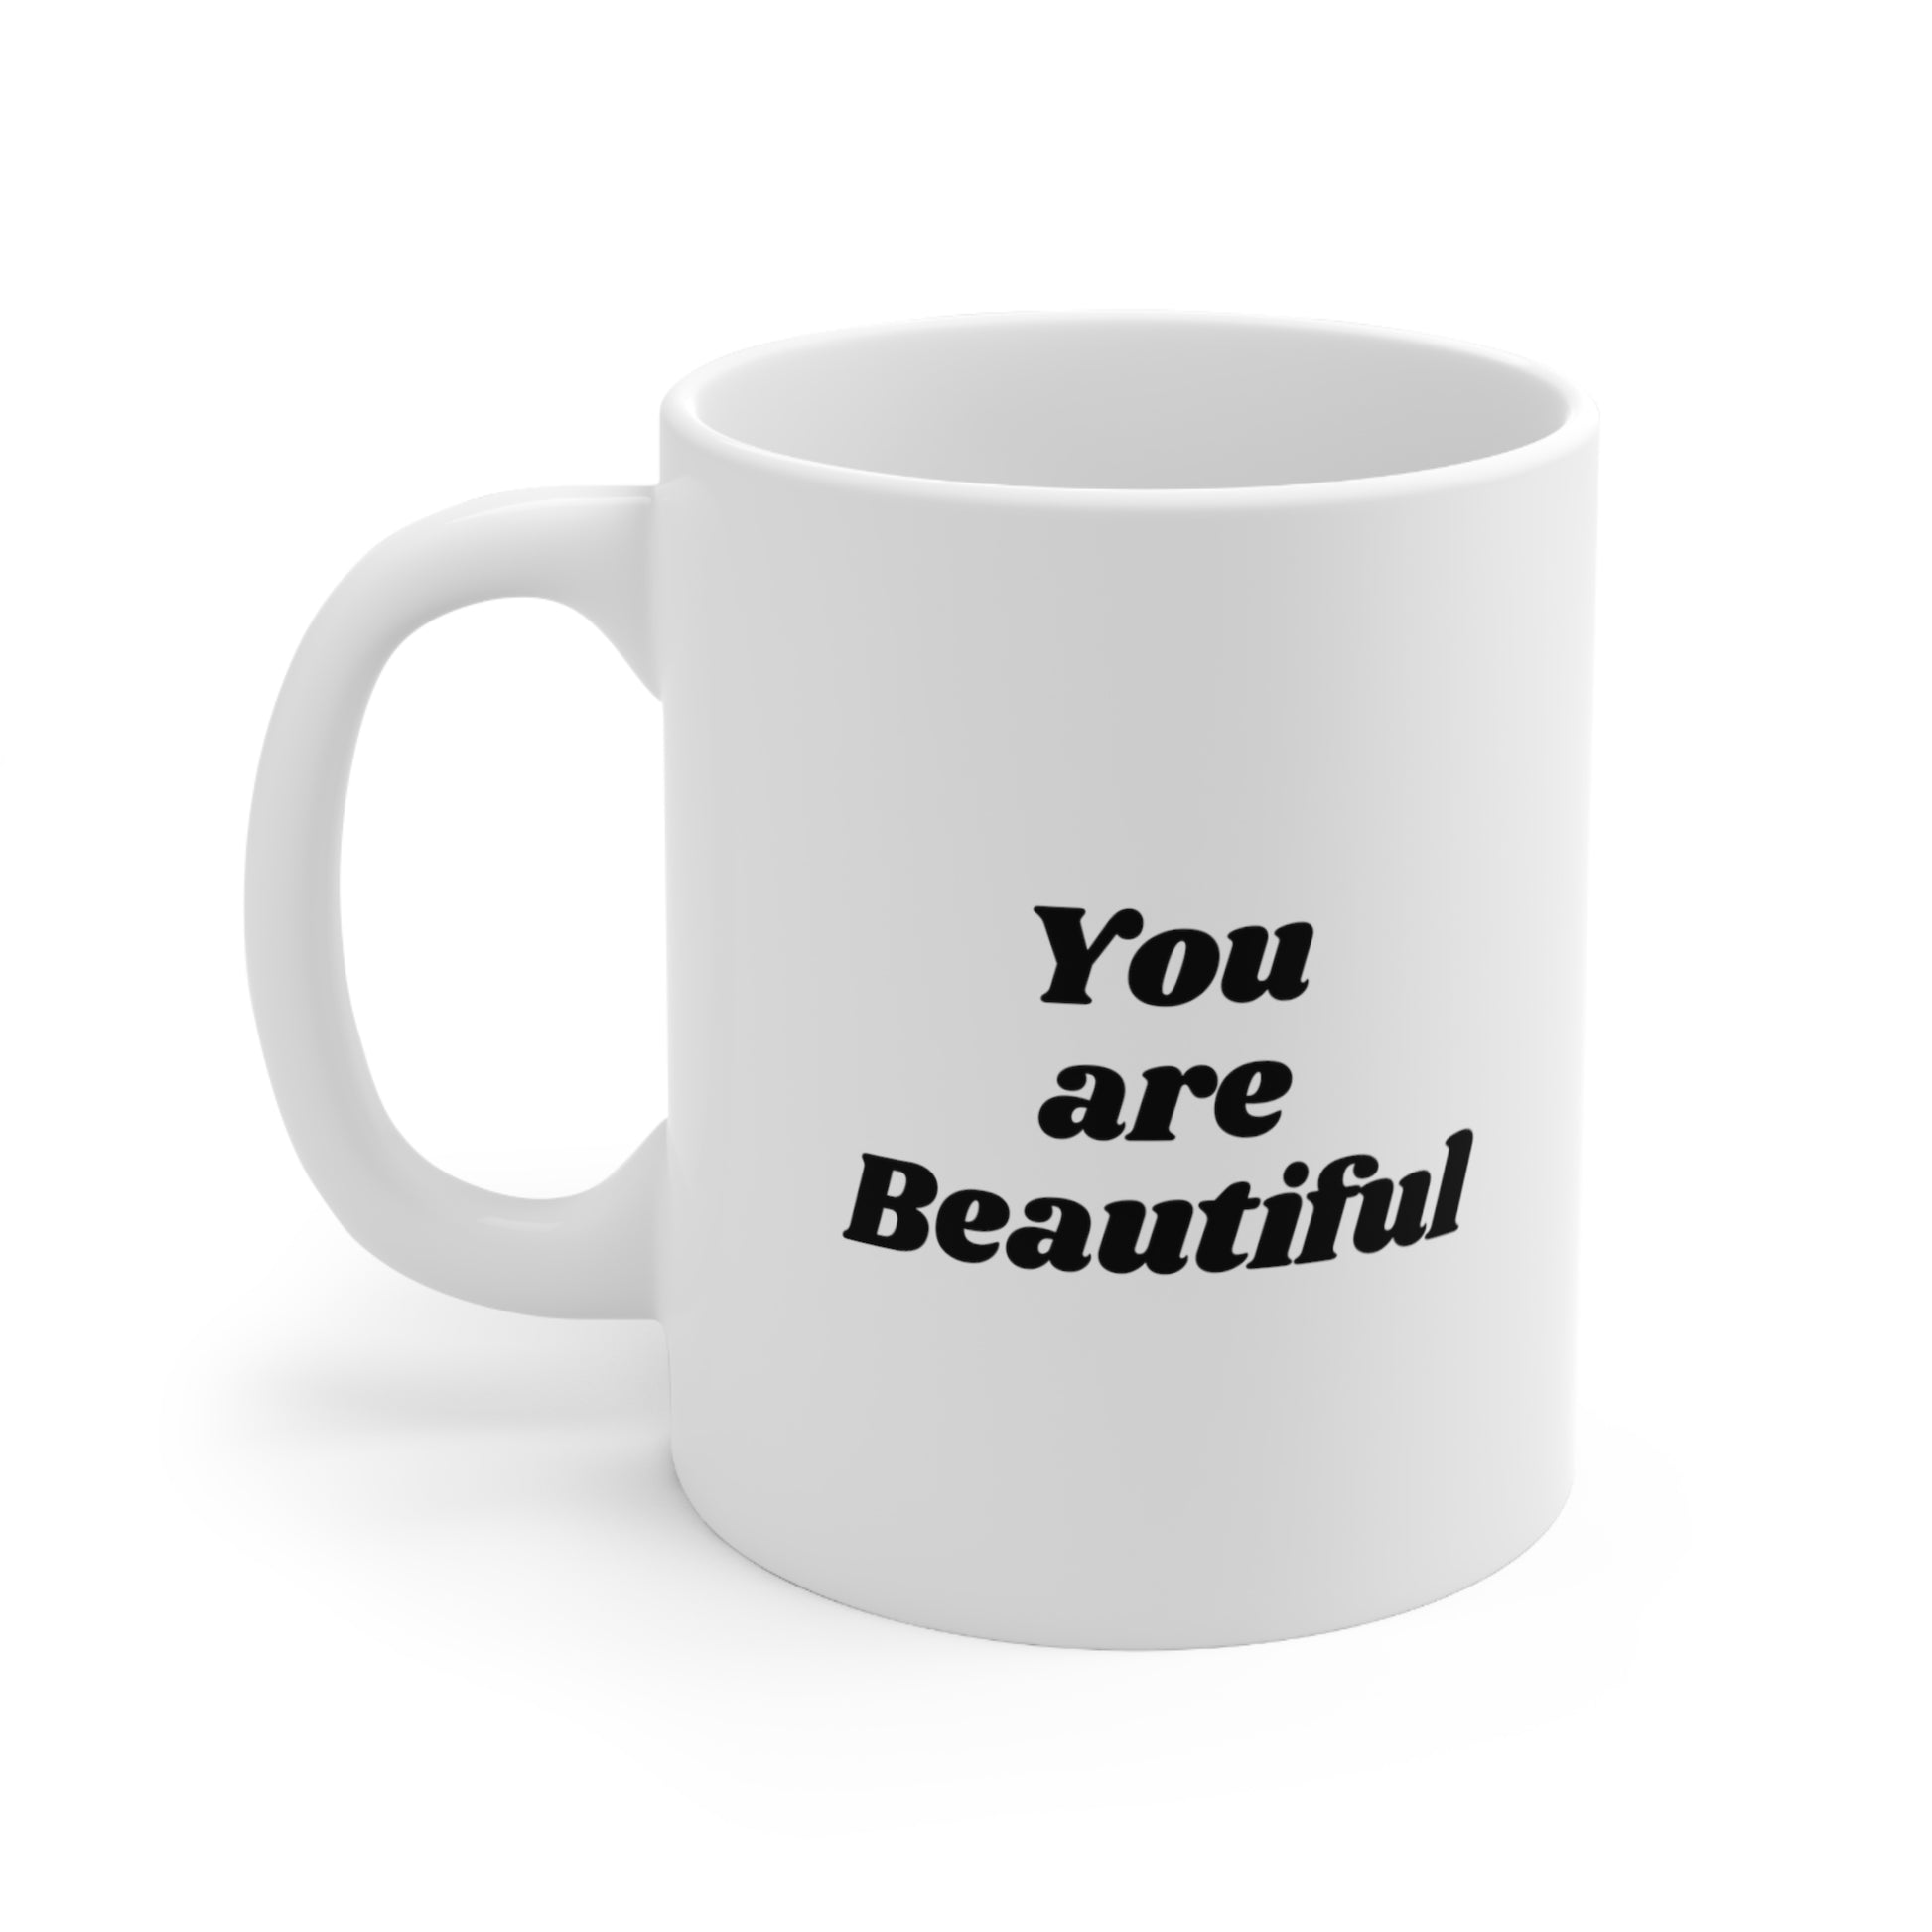 You are Beautiful Coffee Mug